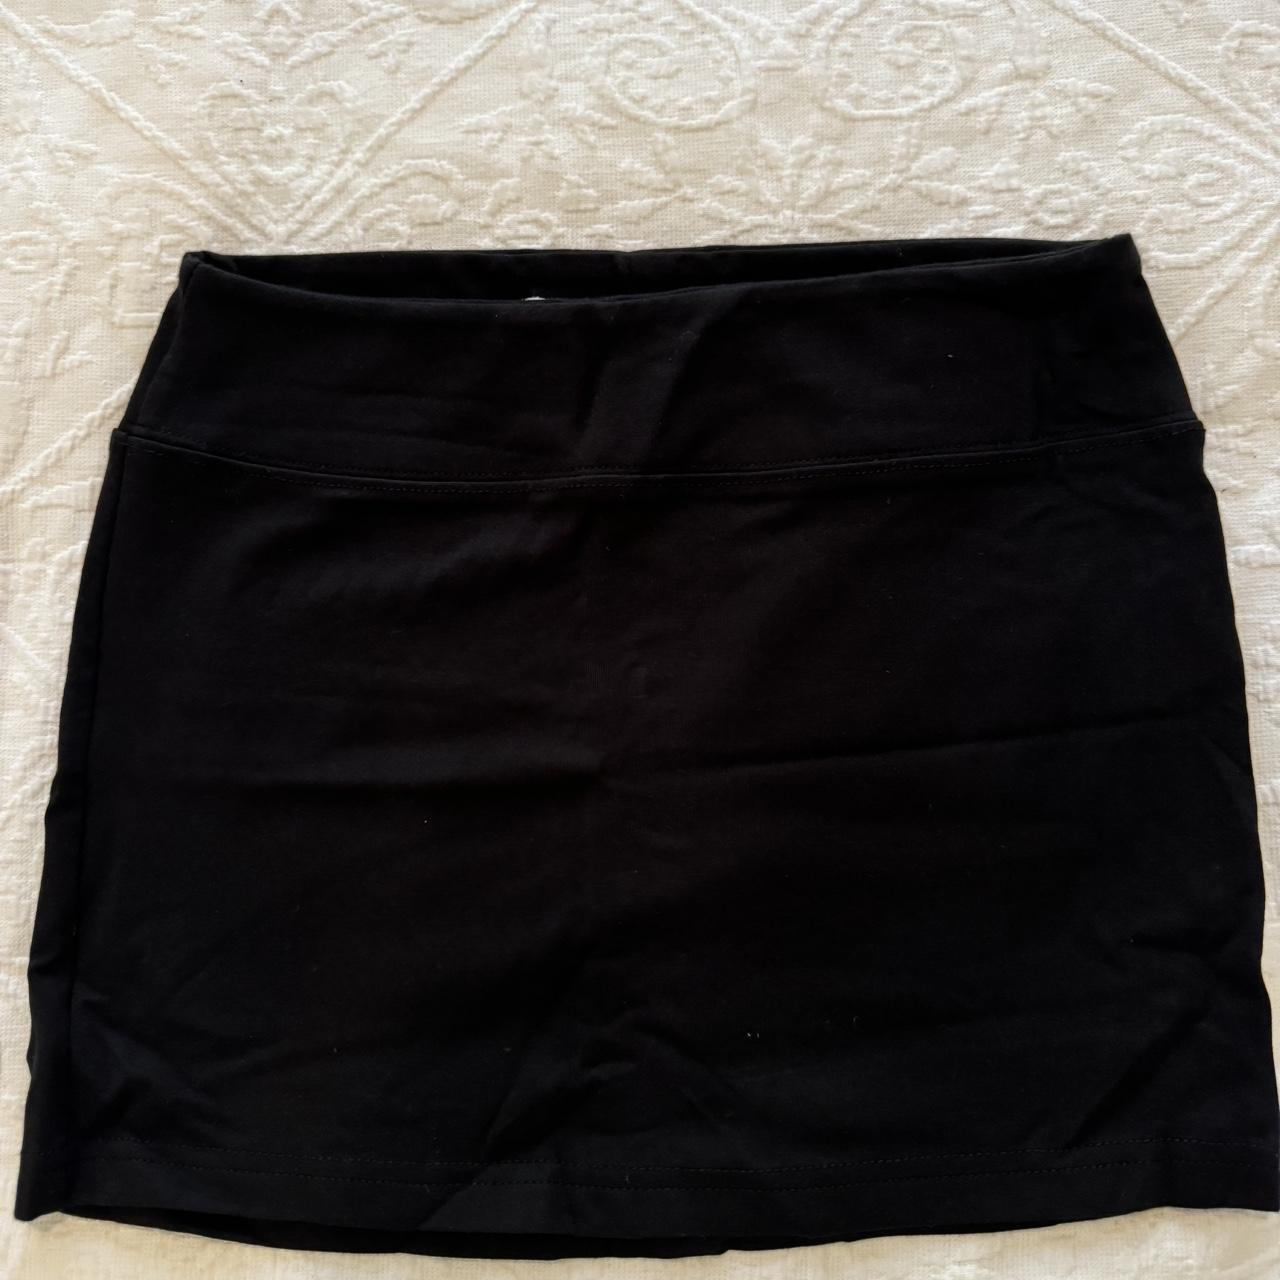 Glasson’s mini tennis skirt, barely worn. - Depop